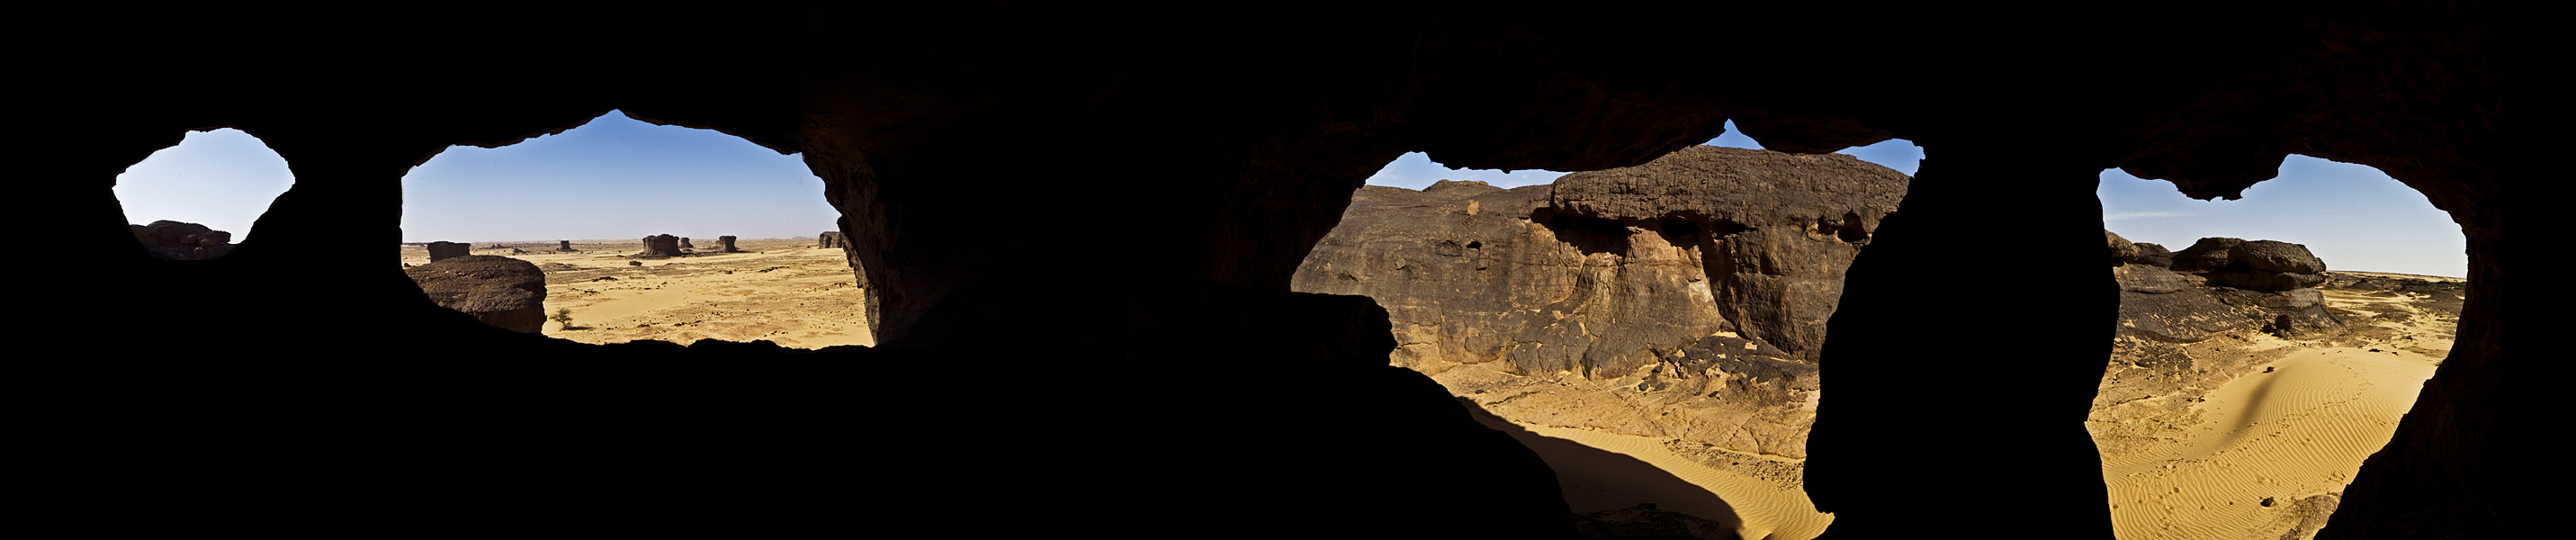 Ahaggar National Park - Spider Rock Panorama - photo by Pierre-Antoine Chereau